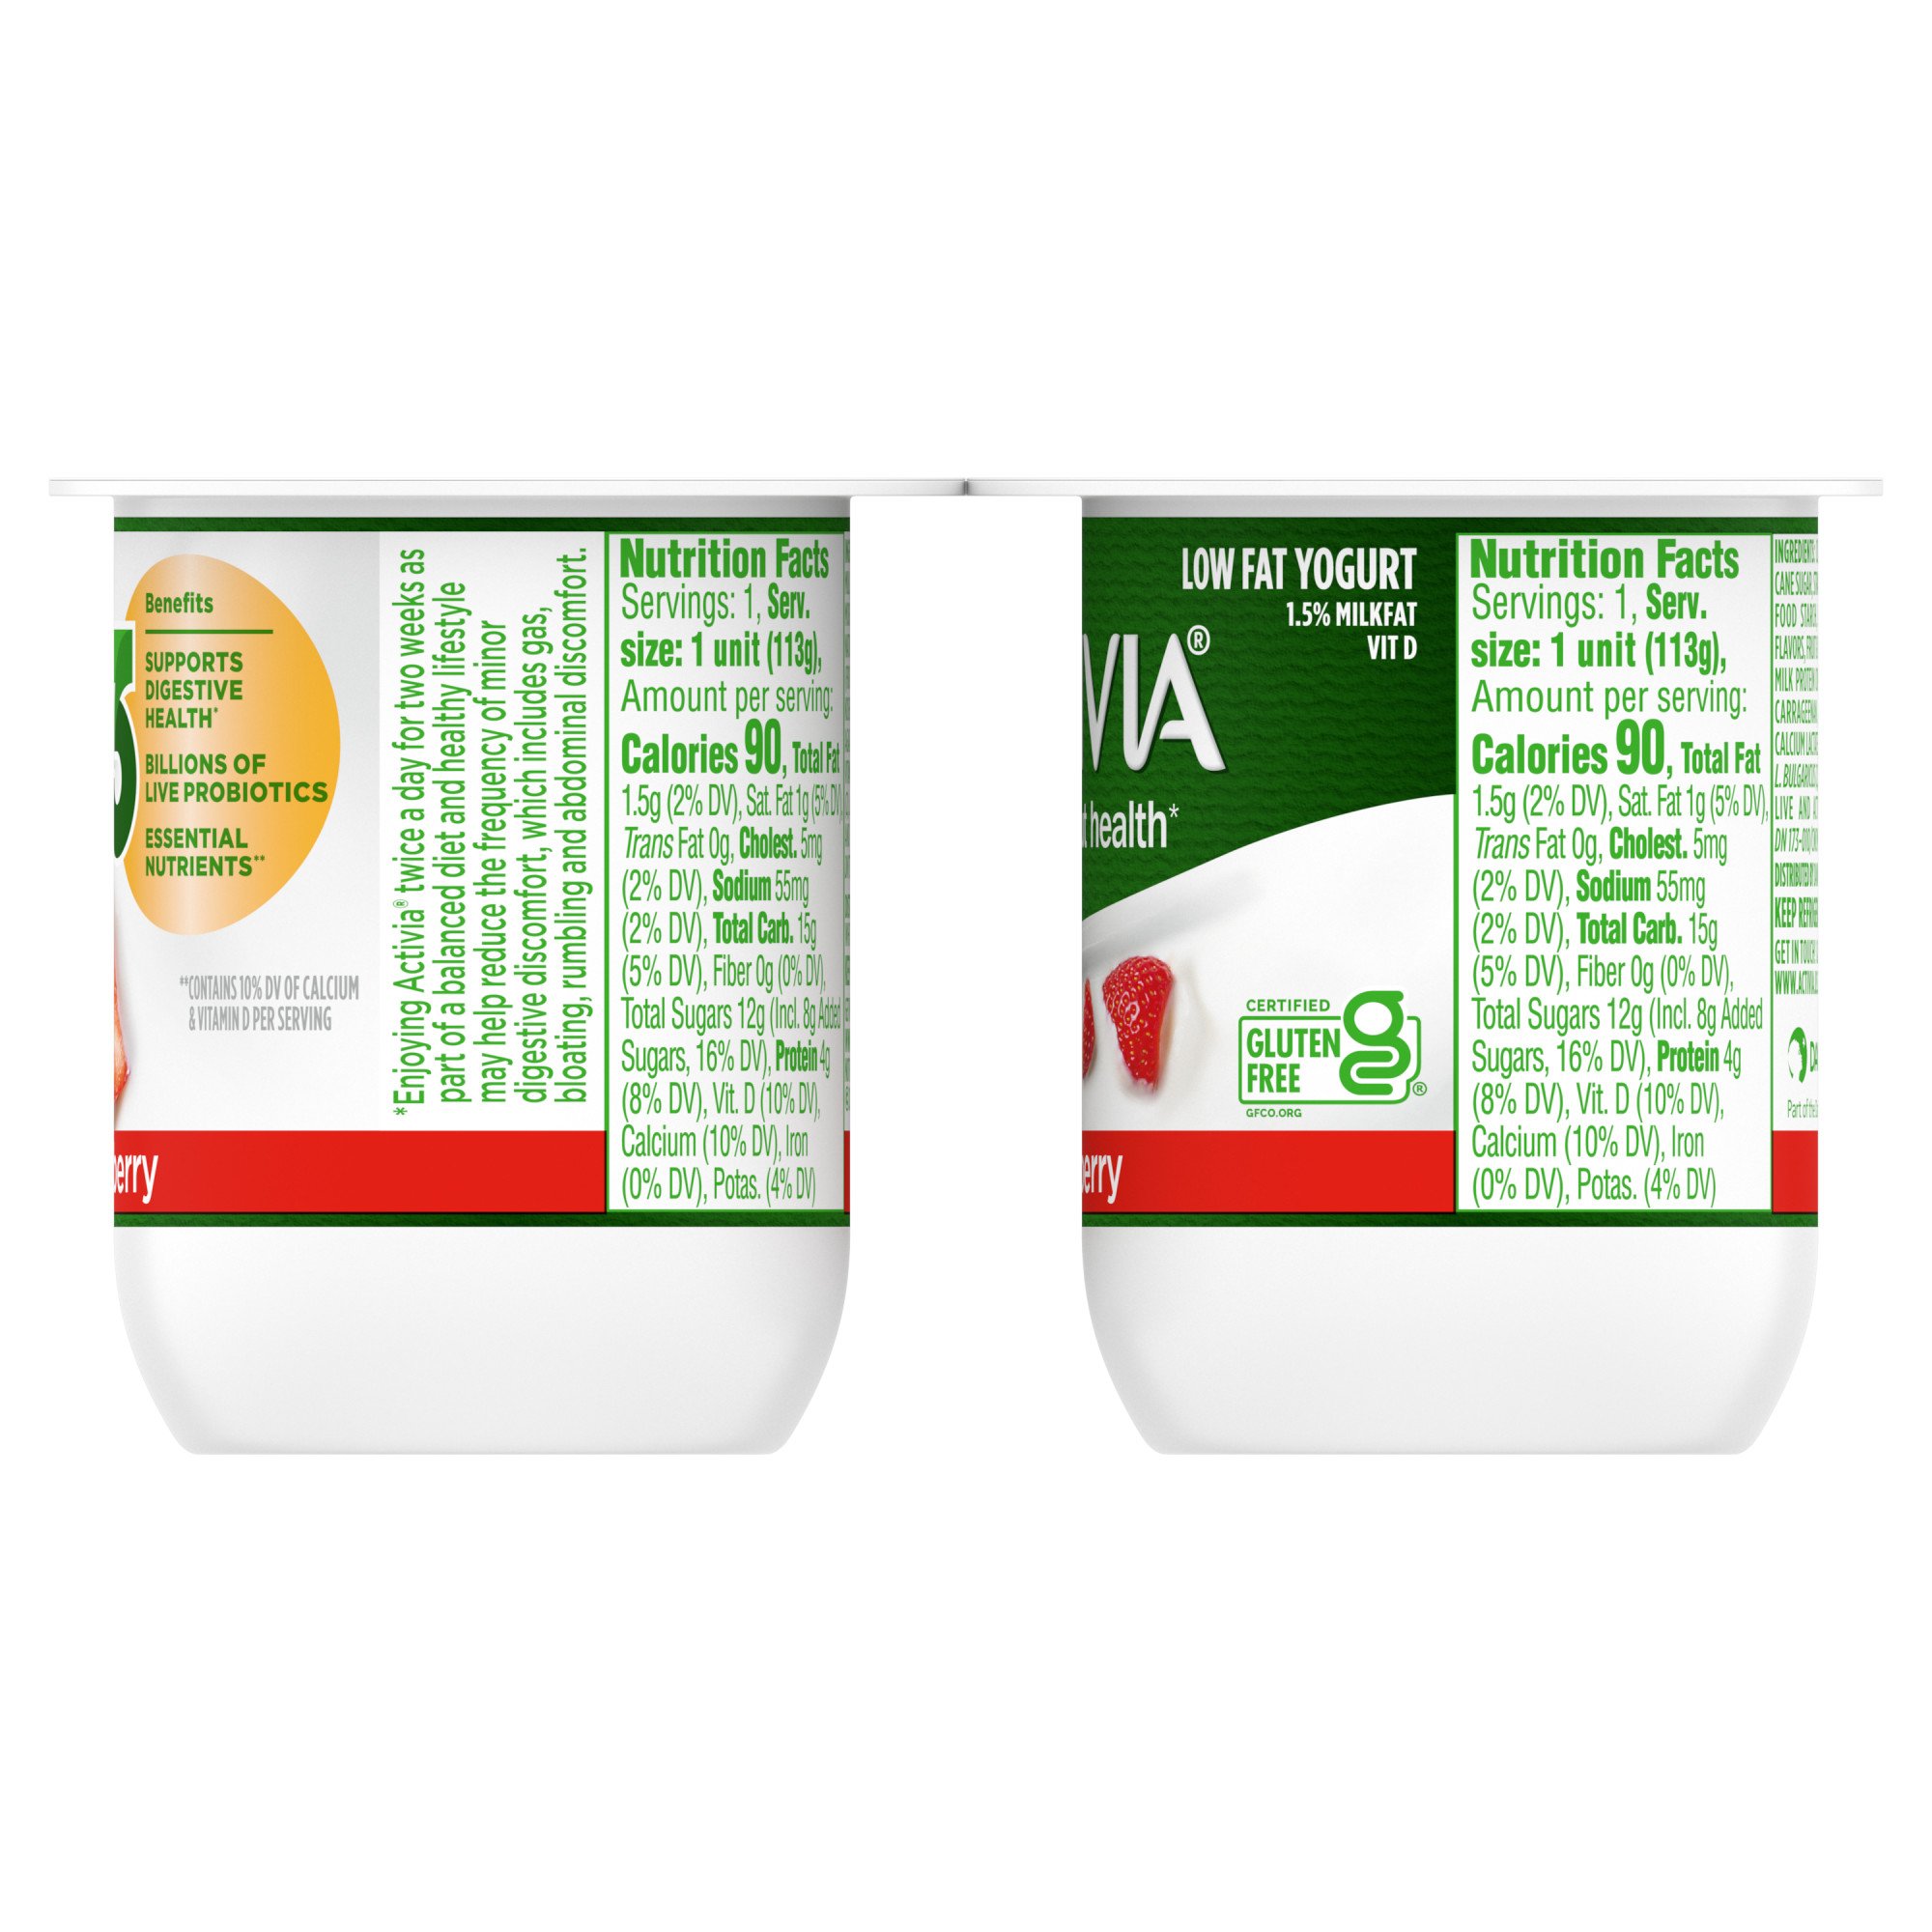 Dannon Activia Probiotic Yogurt Strawberry 4oz EA 4PK